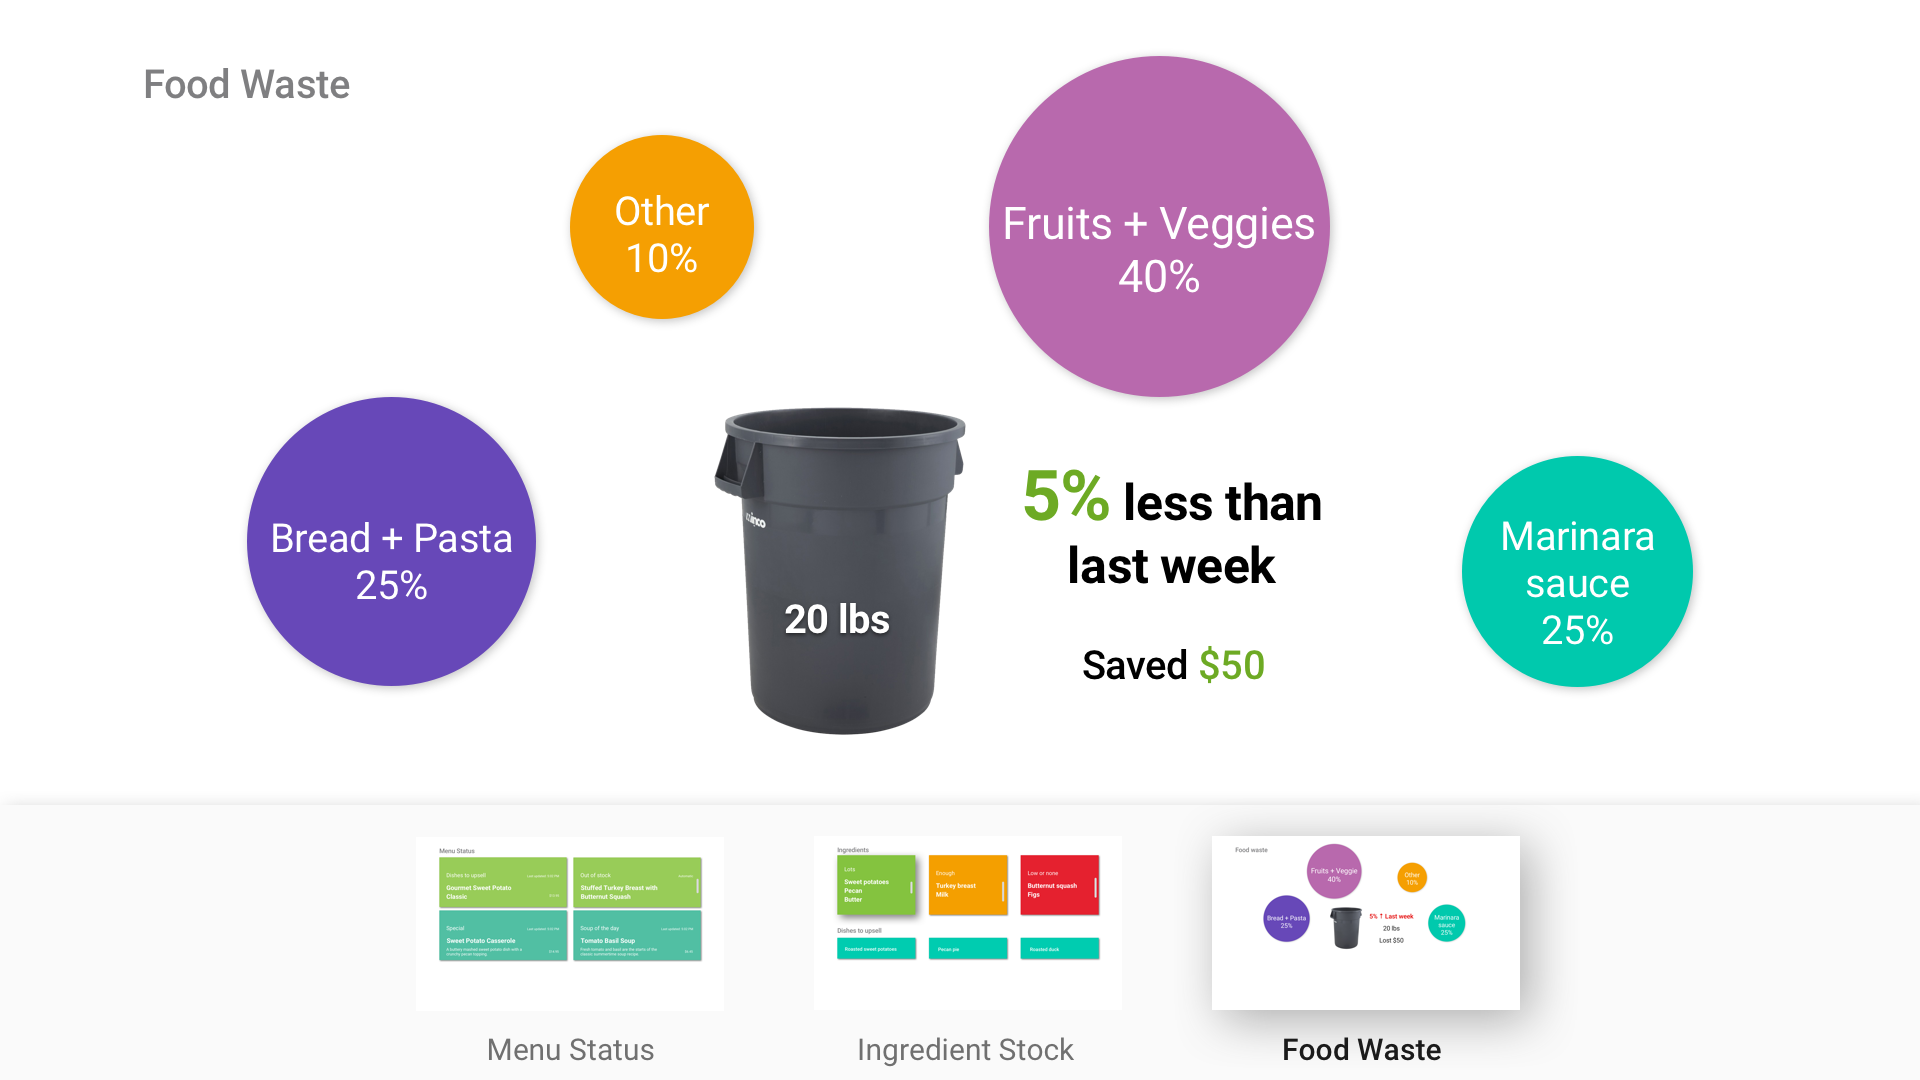 Screen One: Food Waste